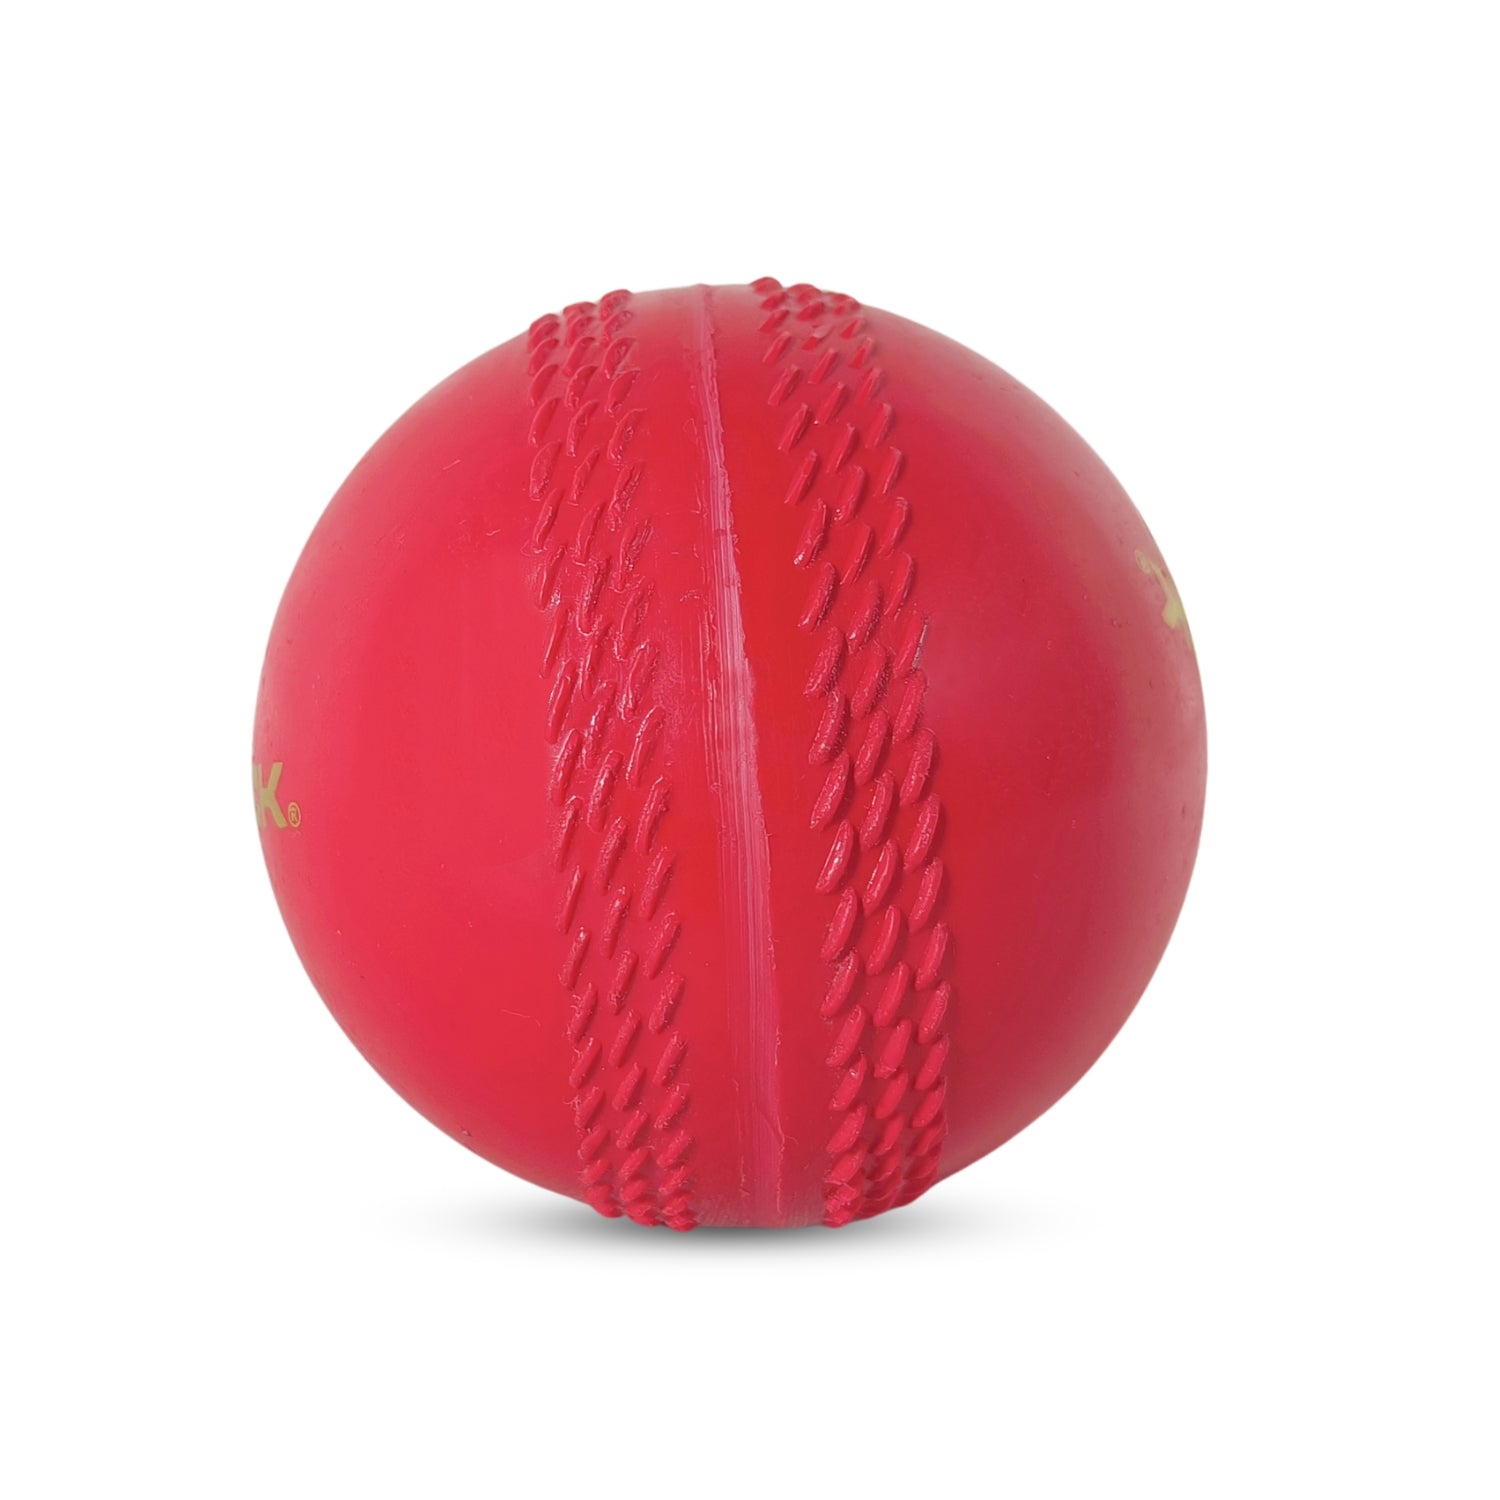 Prokick Synthetic Cricket Ball, Red - 1pc - Best Price online Prokicksports.com